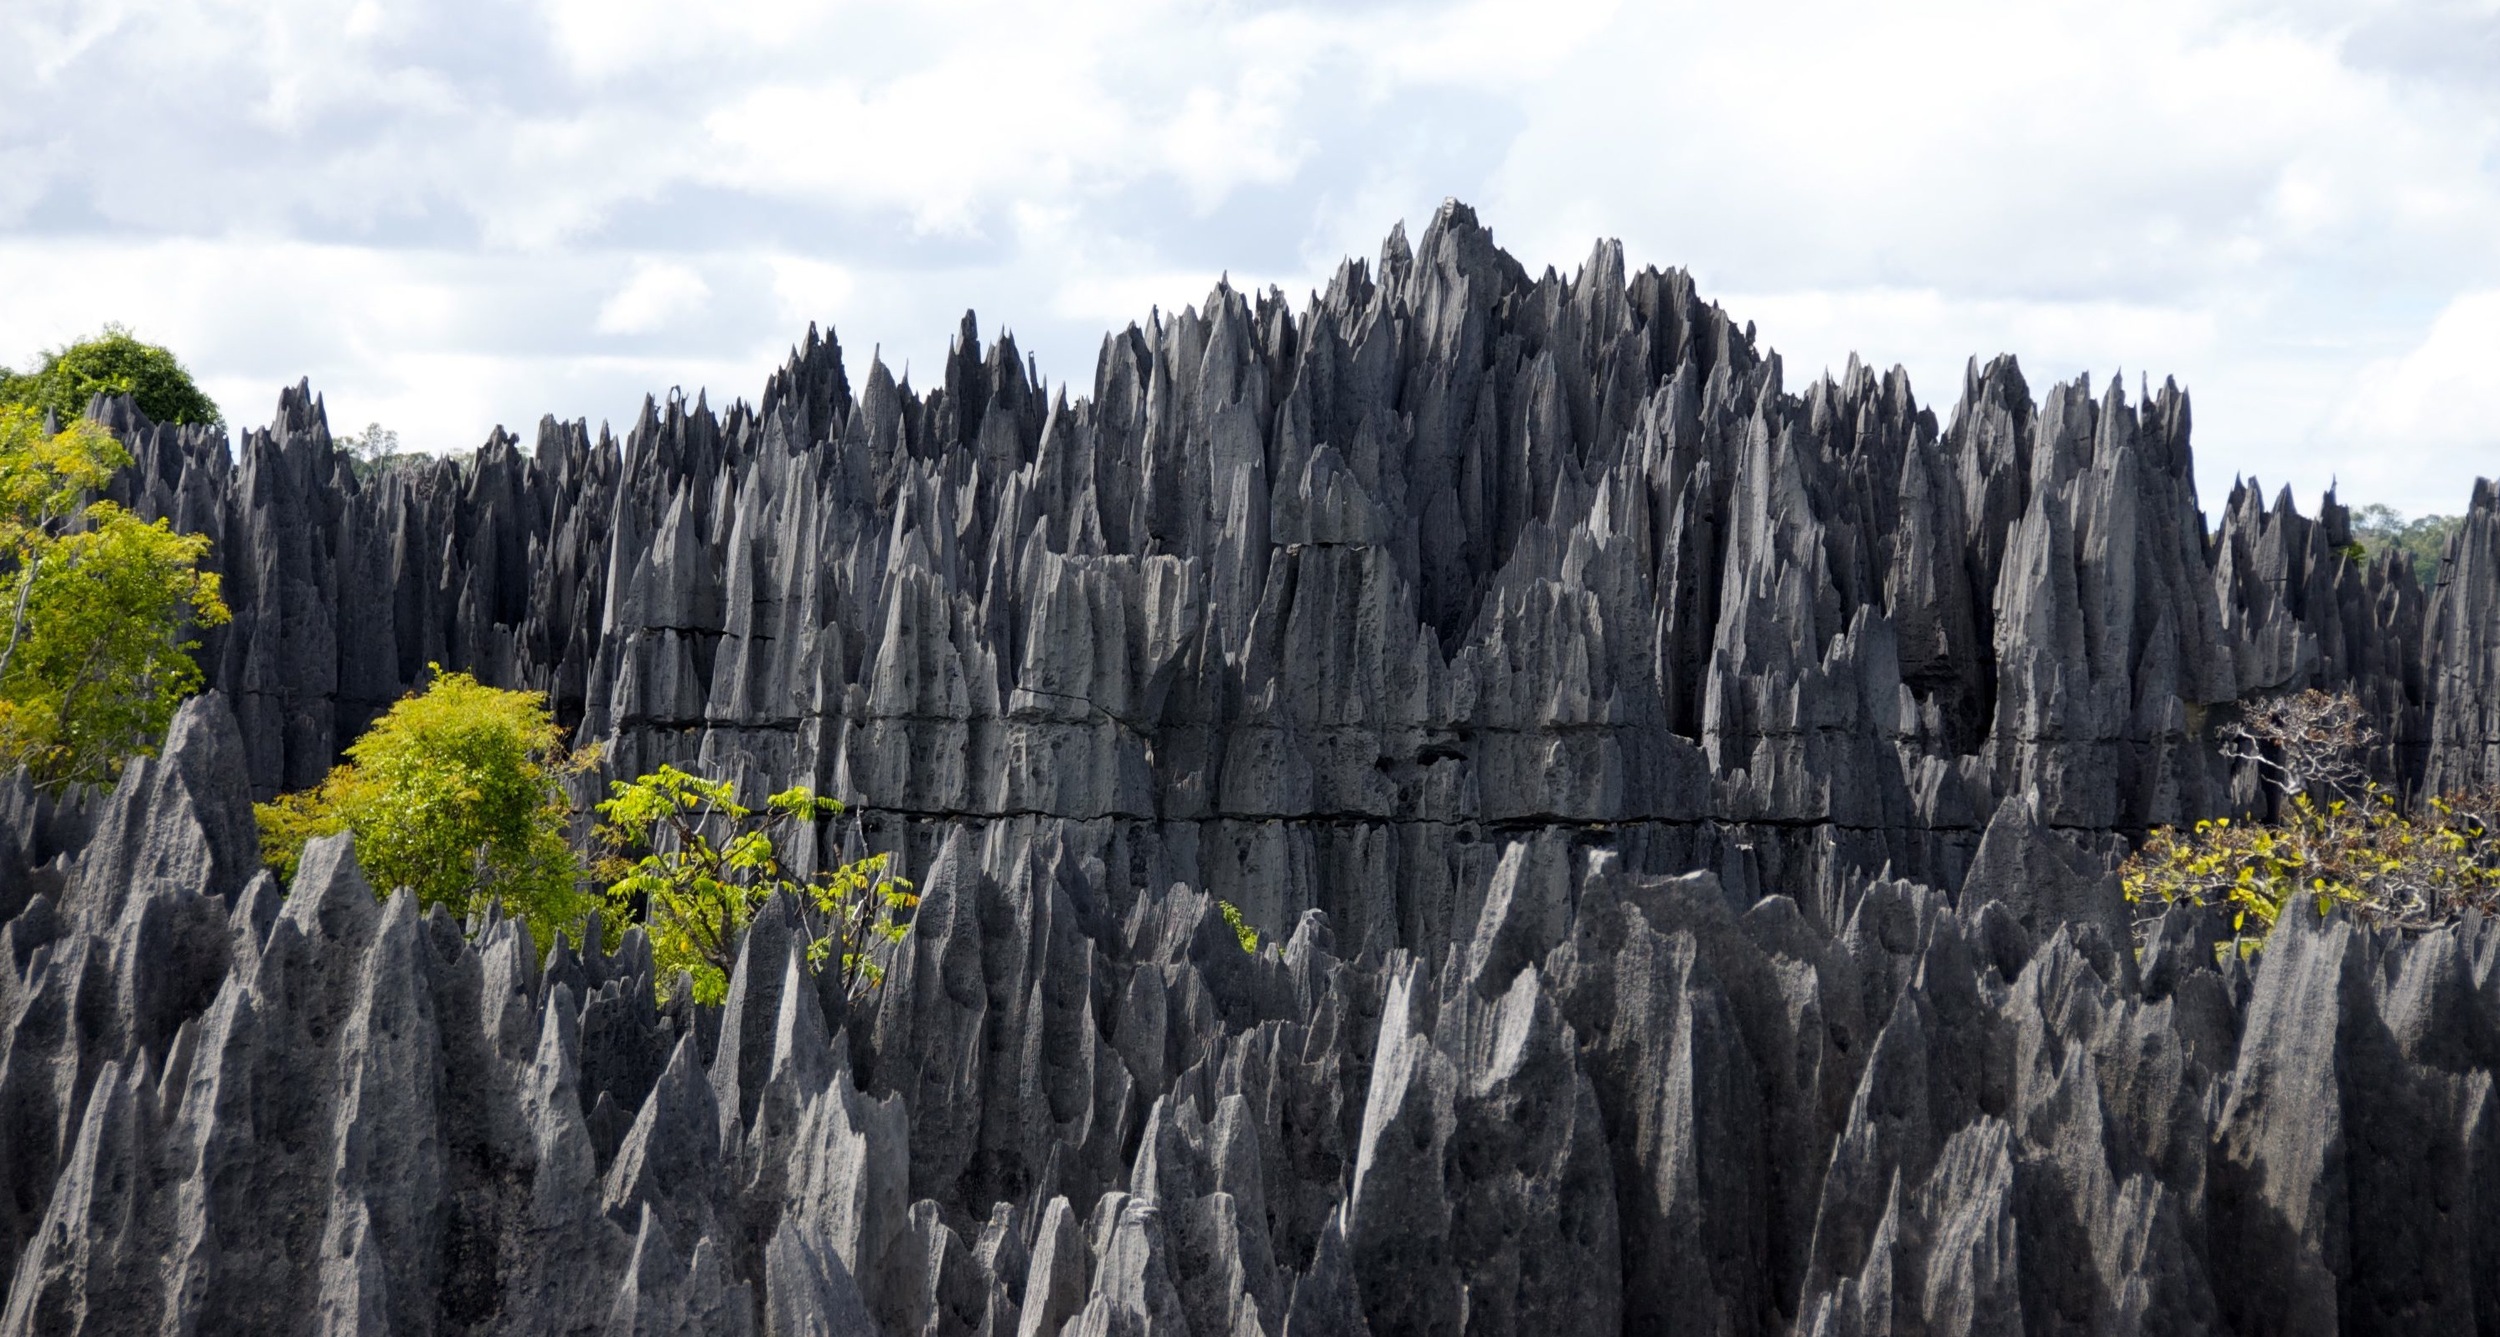 Плотный остро. Цинги-де-Бемараха каменный лес на Мадагаскаре. Цинжи-дю-Бемараха. Заповедник Цинжи-дю-Бемараха Мадагаскар. Каменный лес Цинжи-дю-Бемараха.